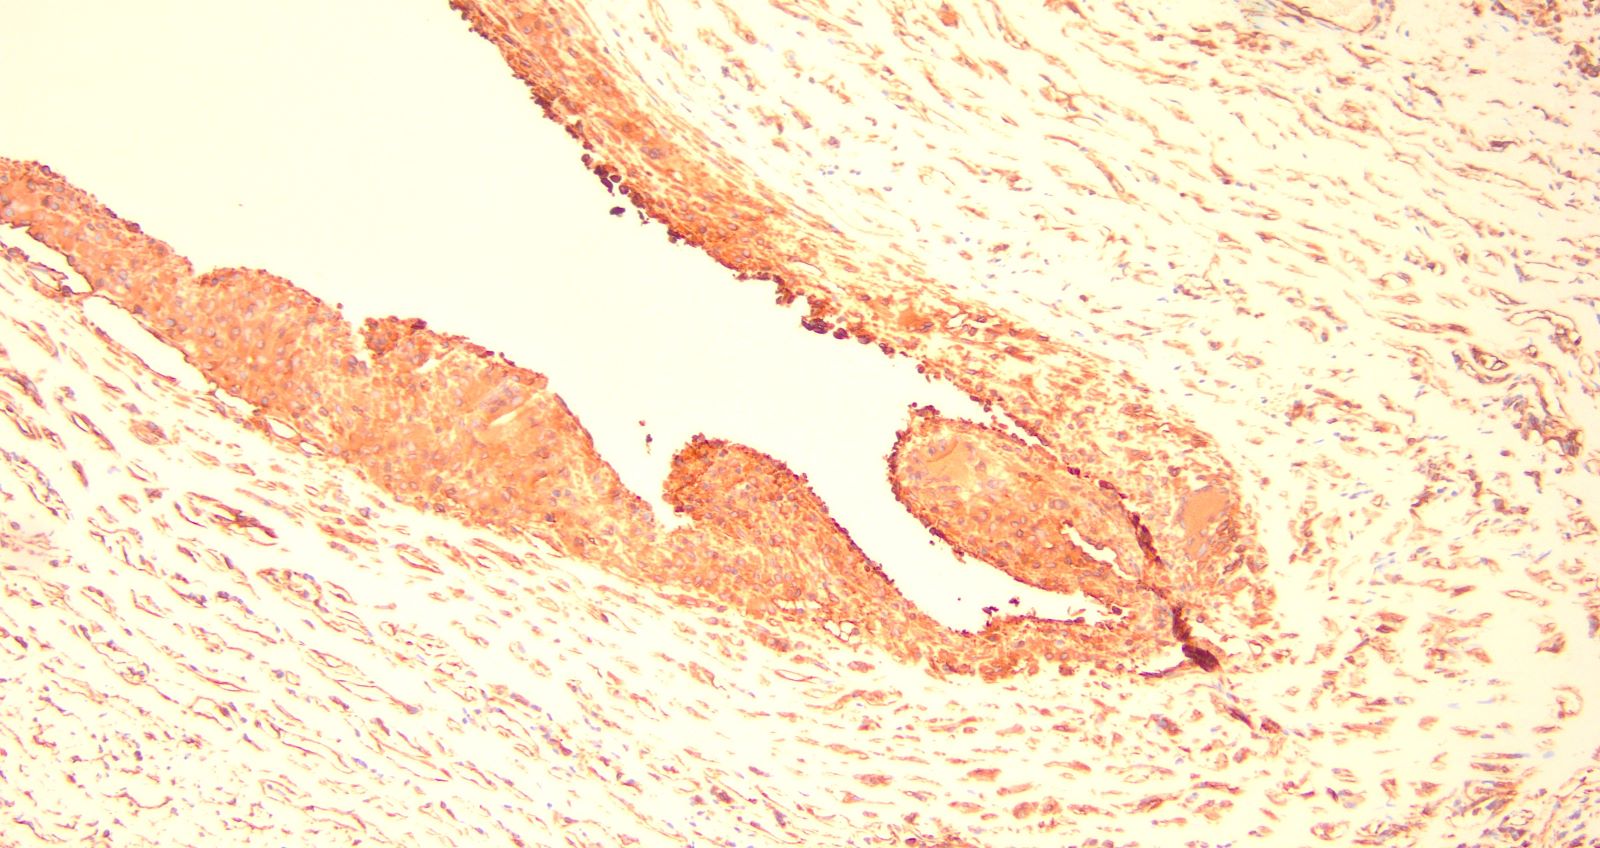 Synovial metaplasia vimentin